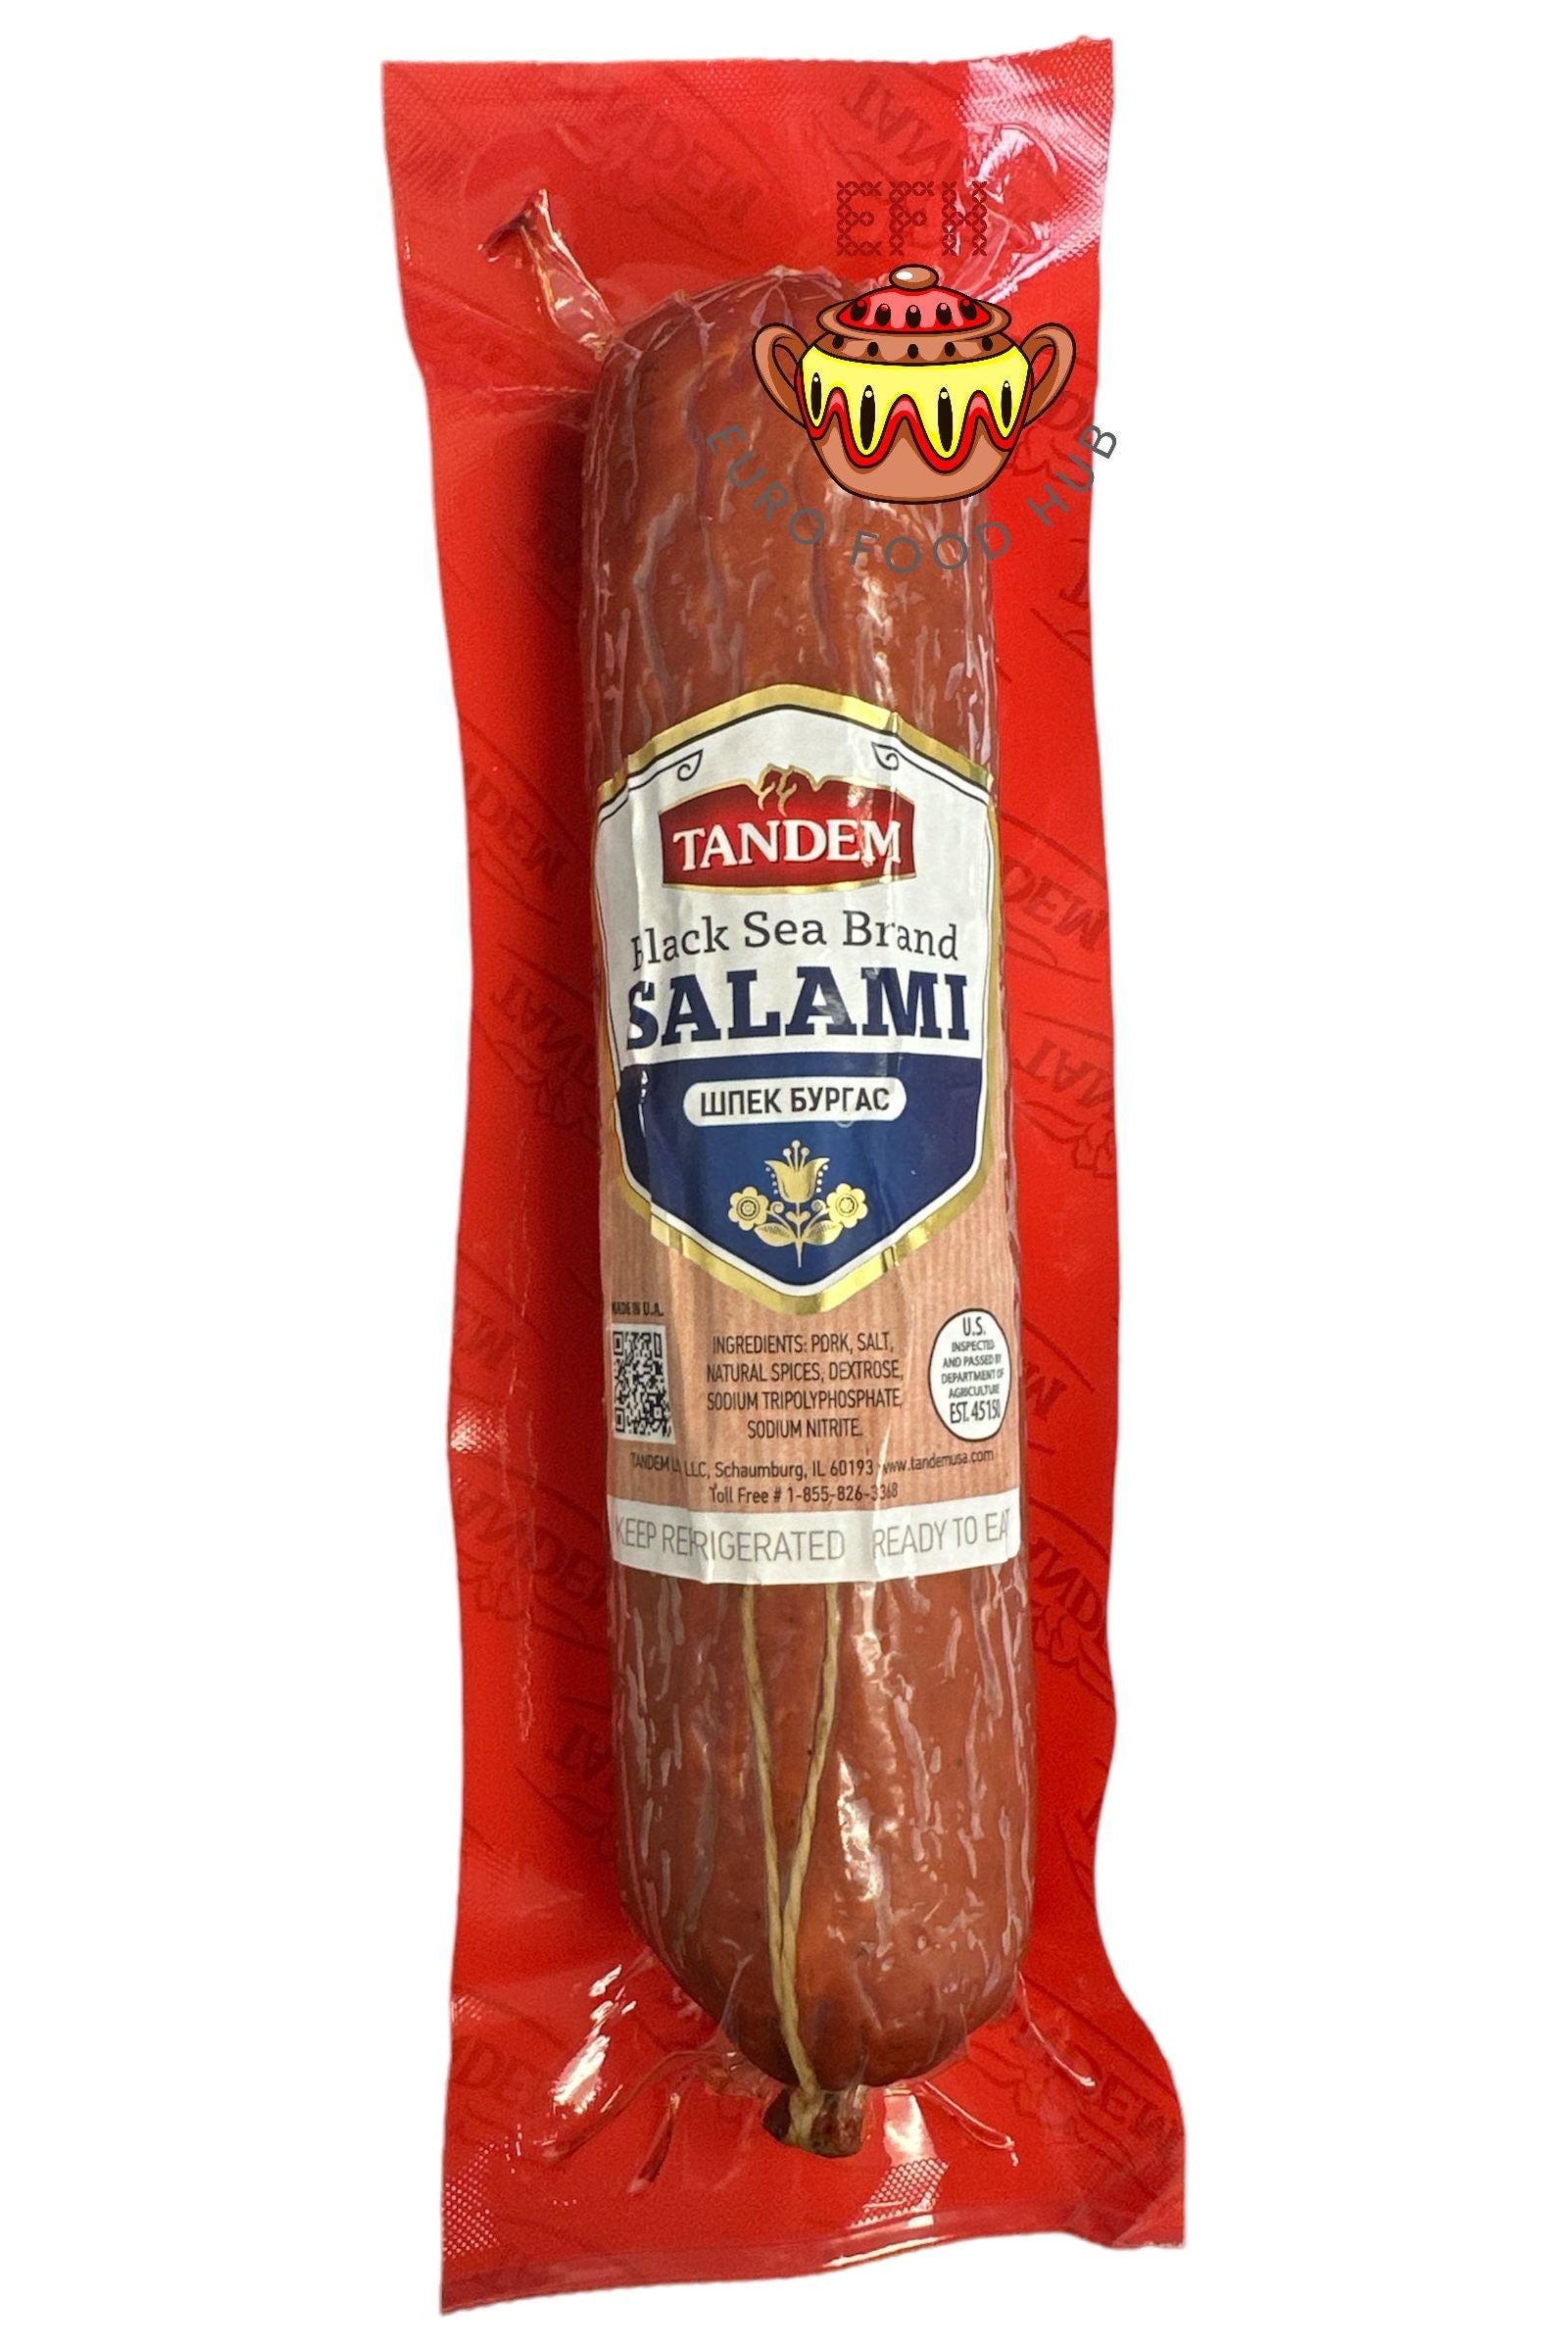 Tandem Black Sea Brand Salami - BURGAS - 1 lb